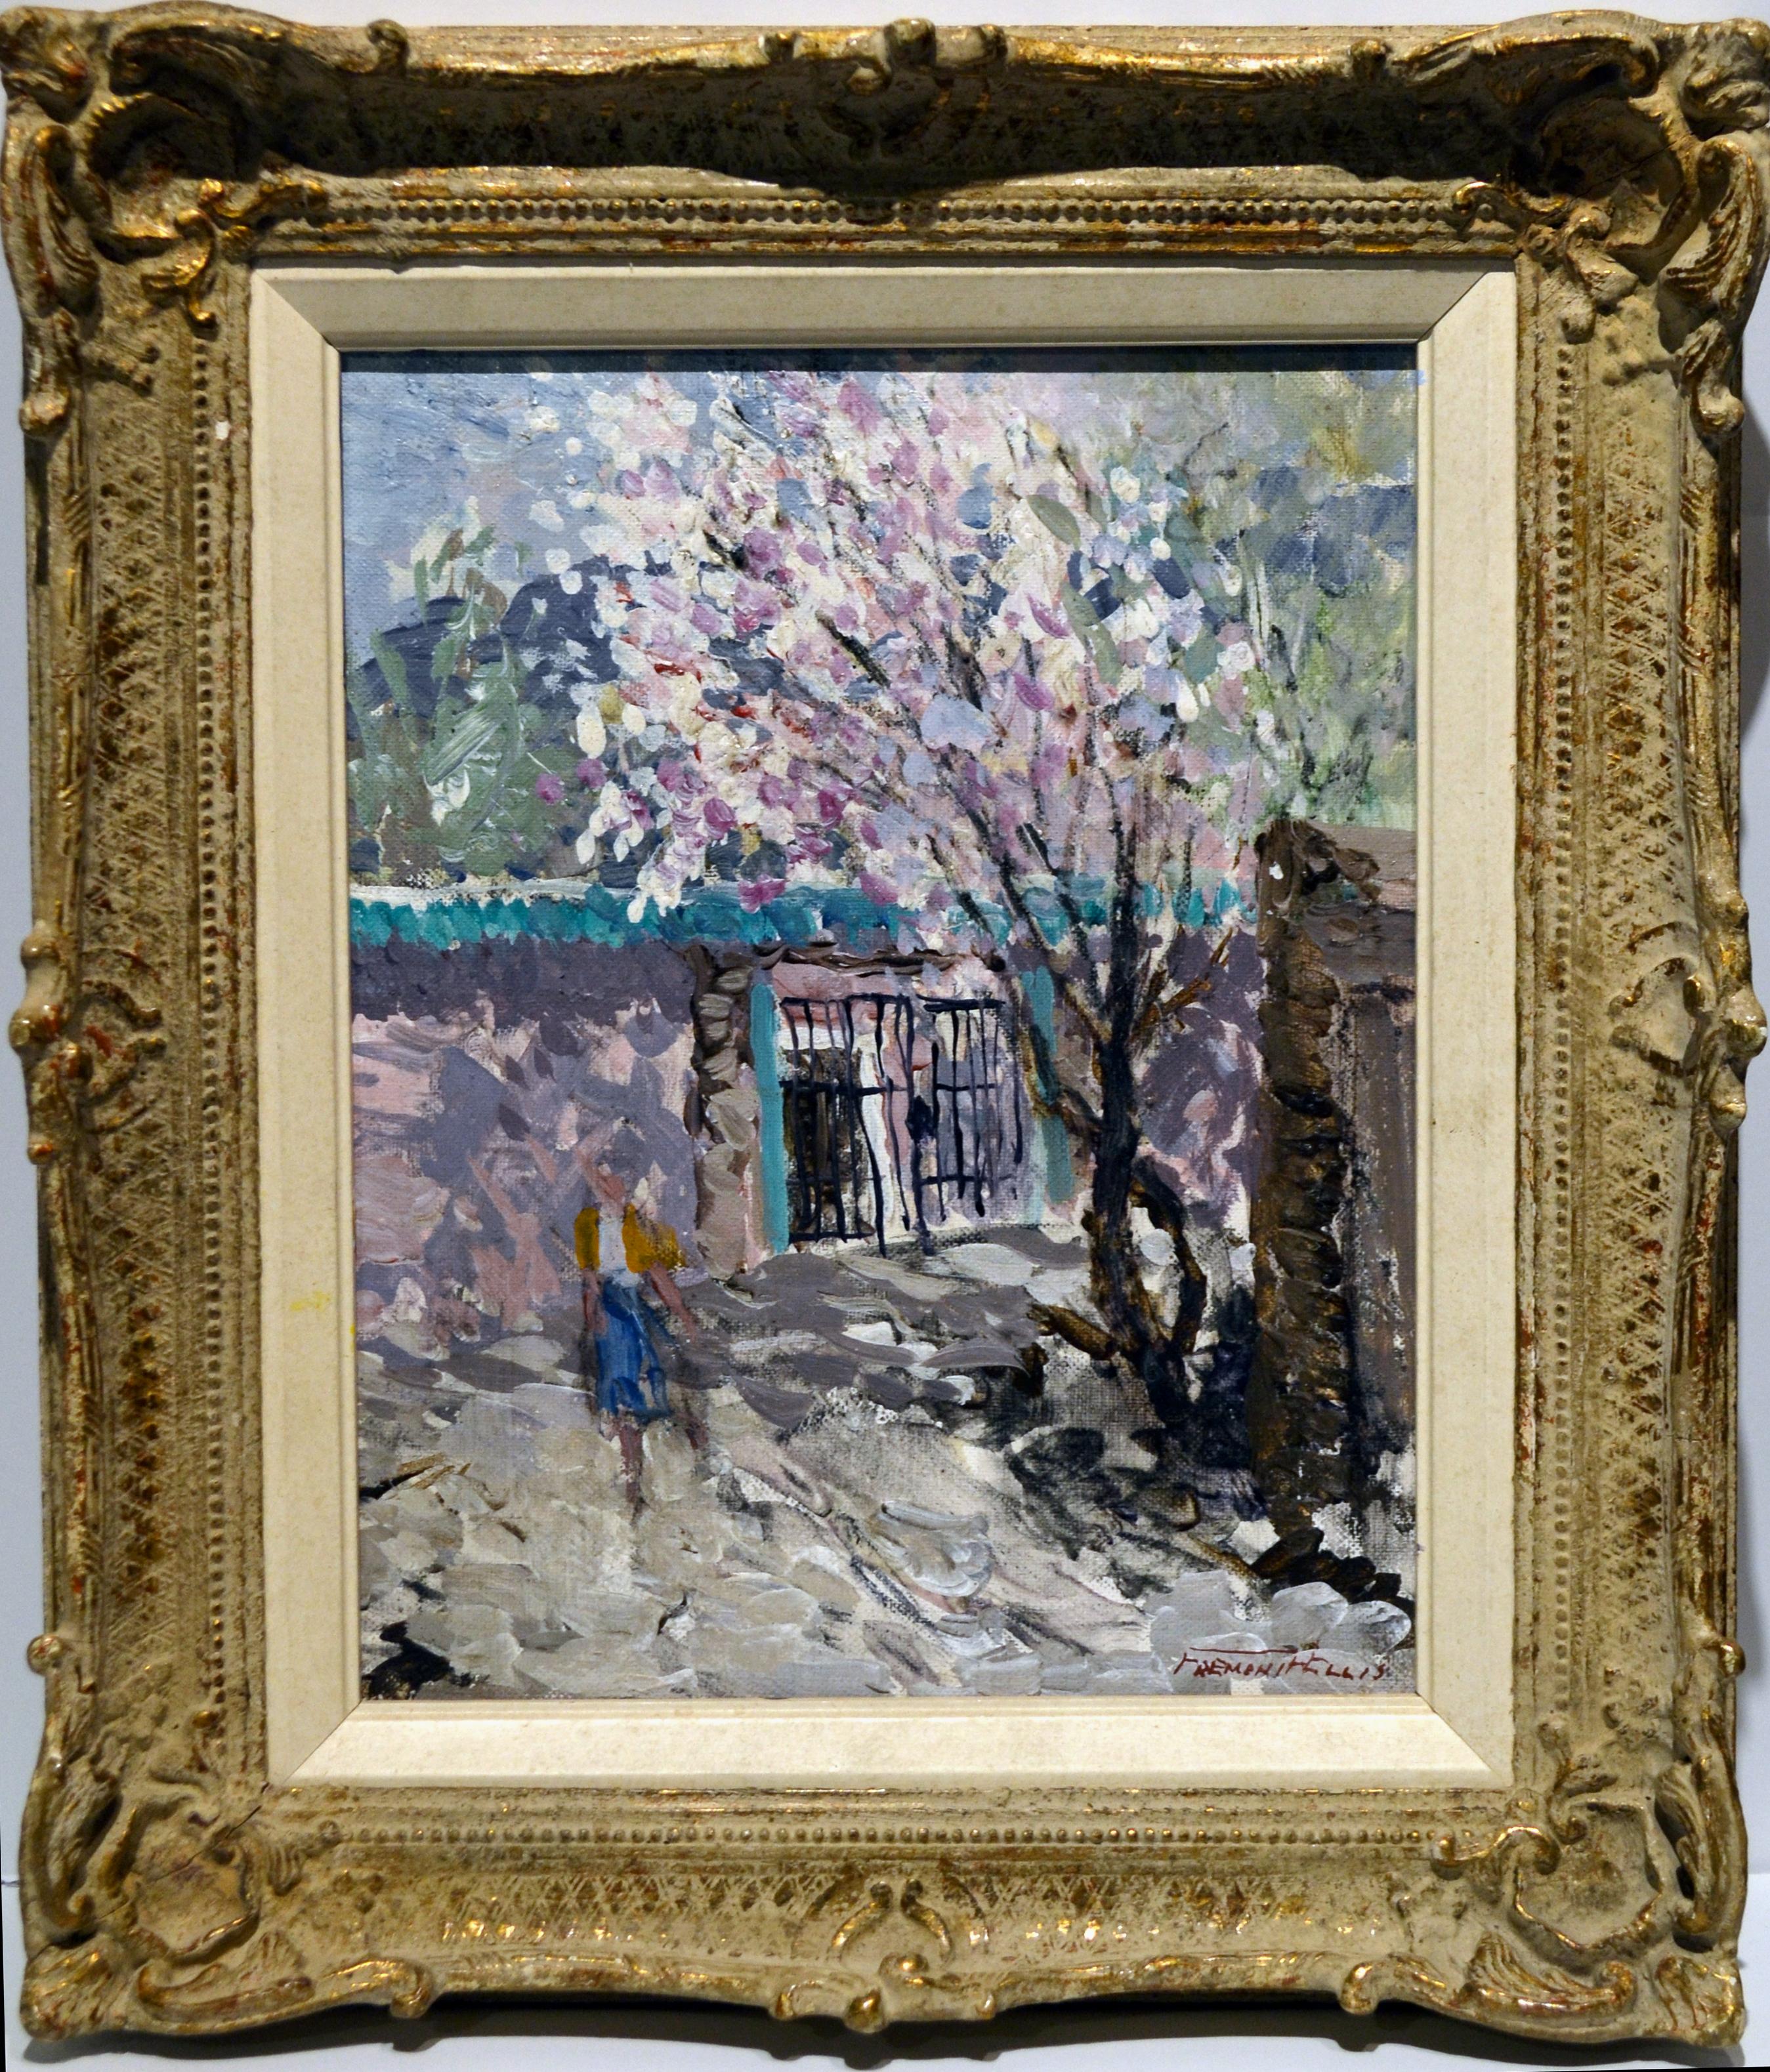 Ellis, "Apple Blossoms" Oil/Board 10x8 Inches Colorado Aspen Flowering Tree - Painting by Fremont Ellis